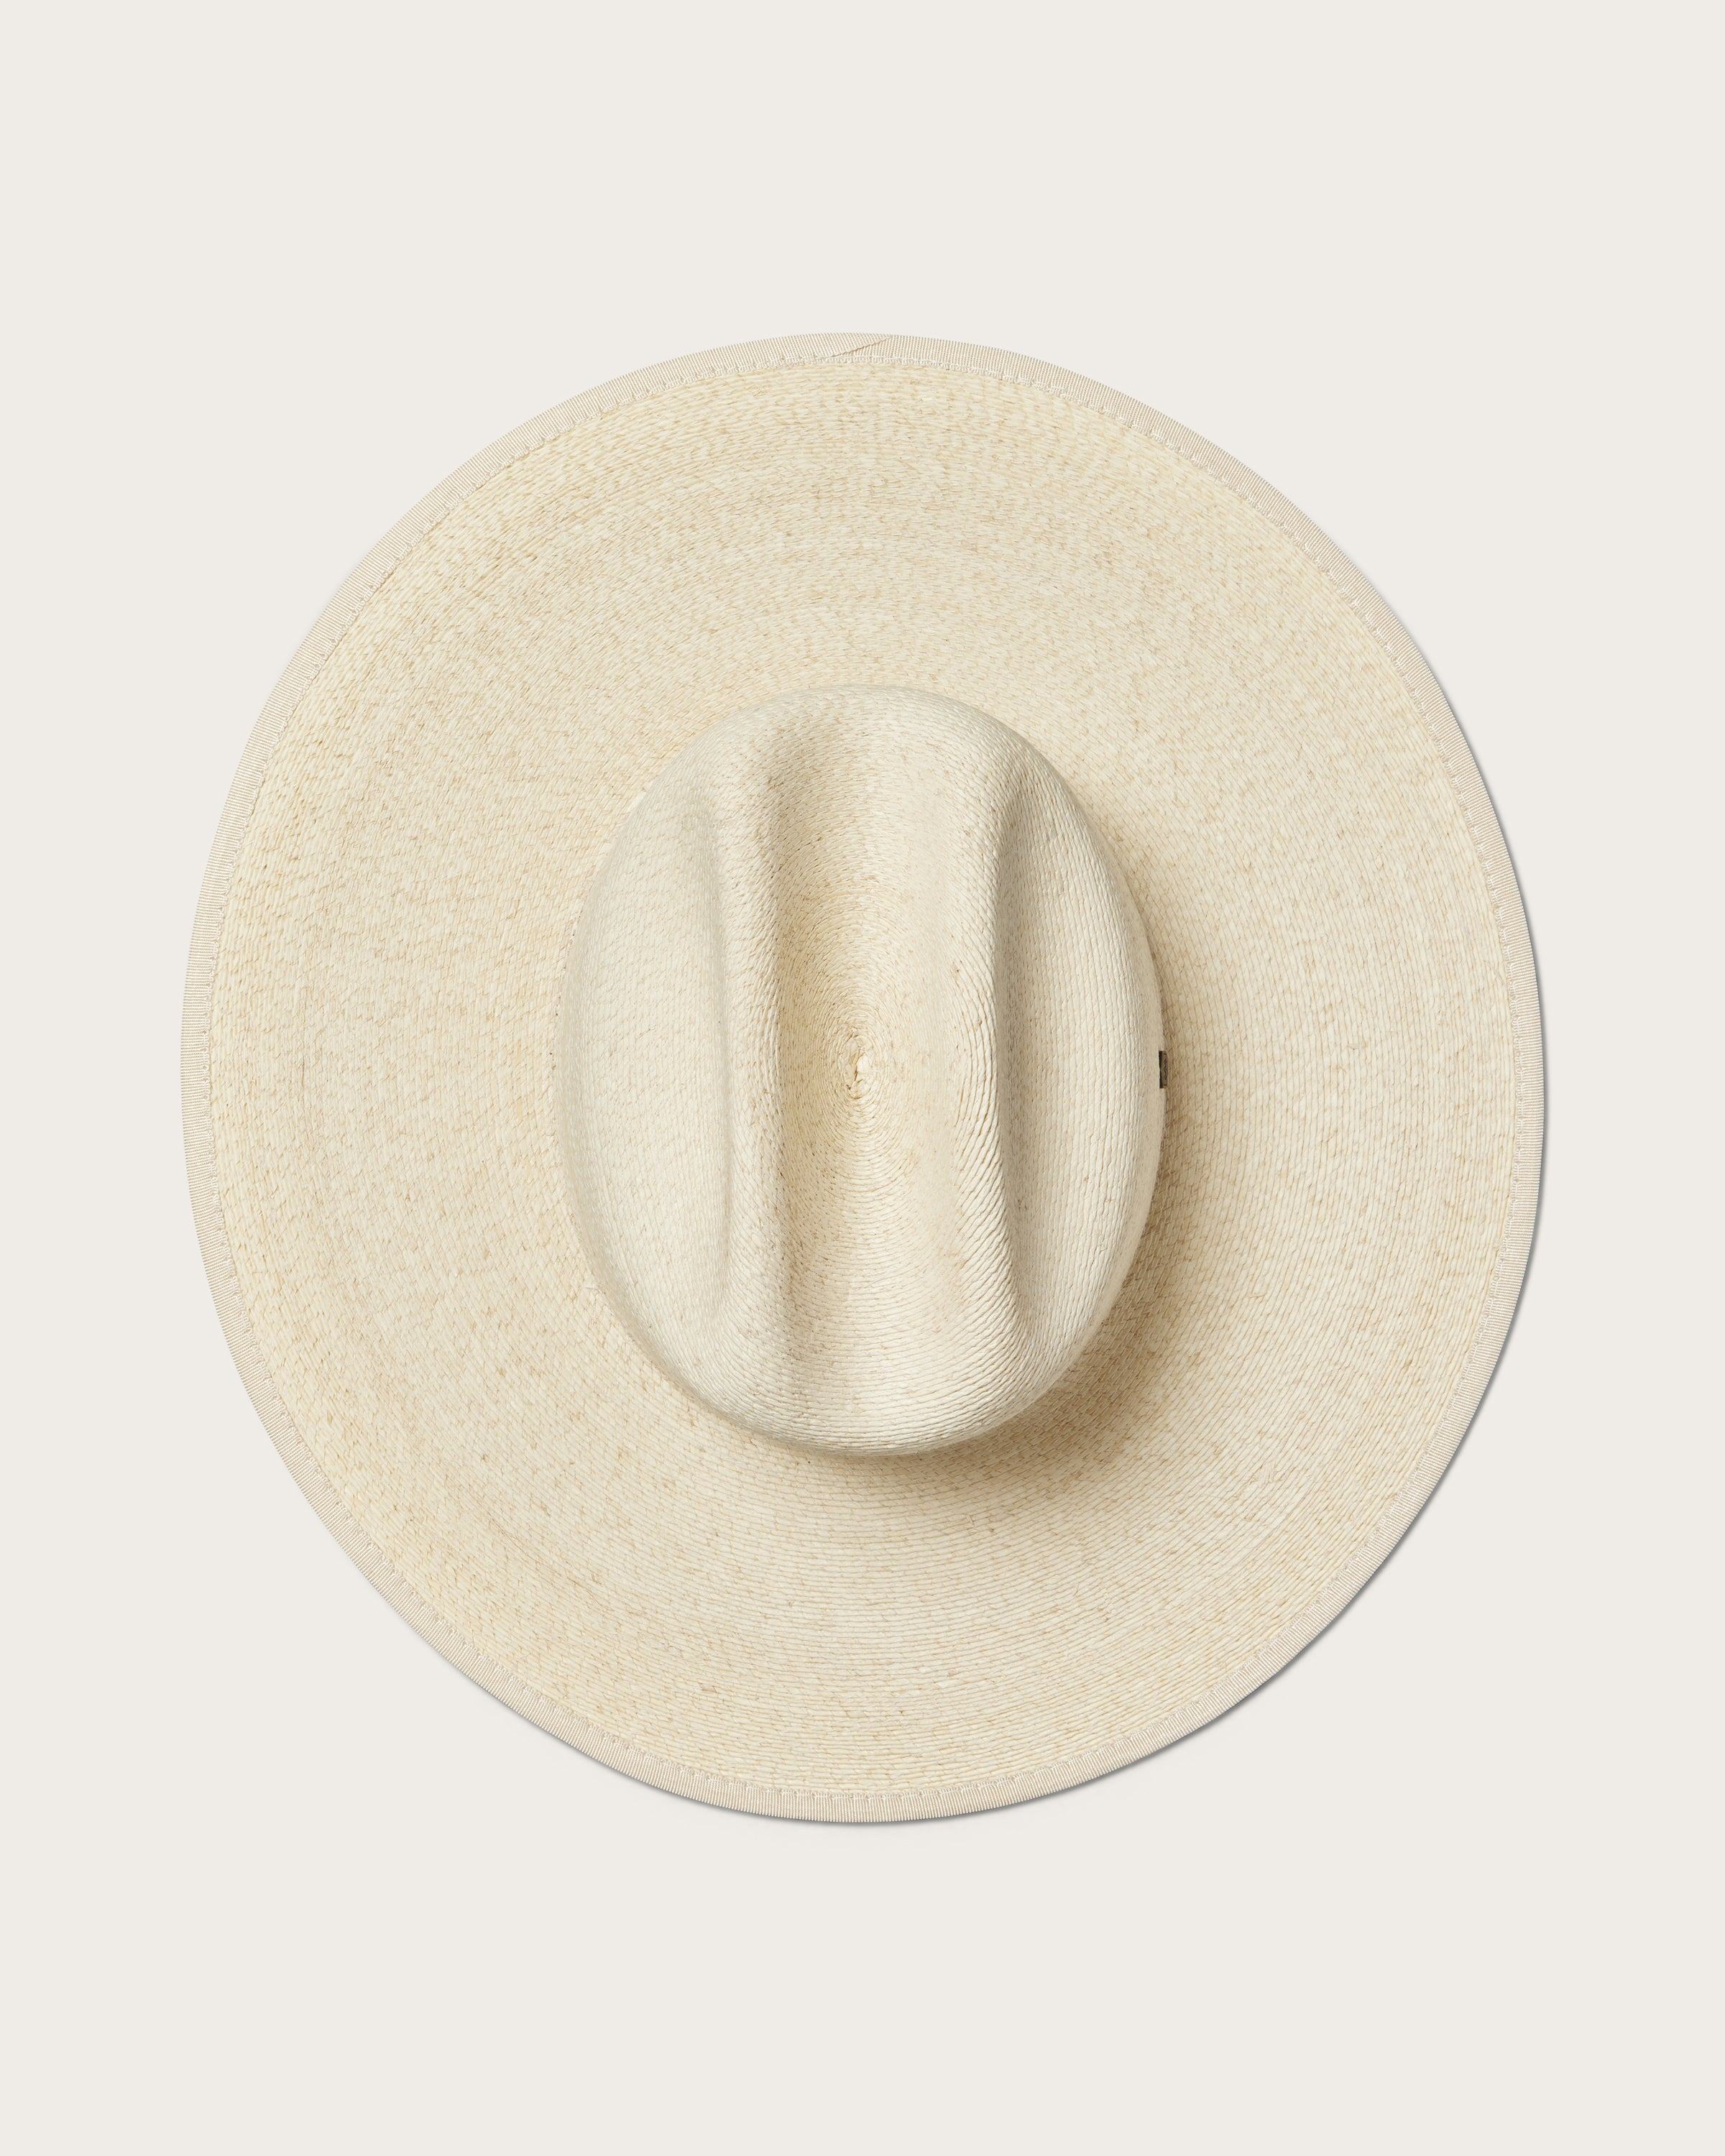 Toluca in Sand - undefined - Hemlock Hat Co. Premium